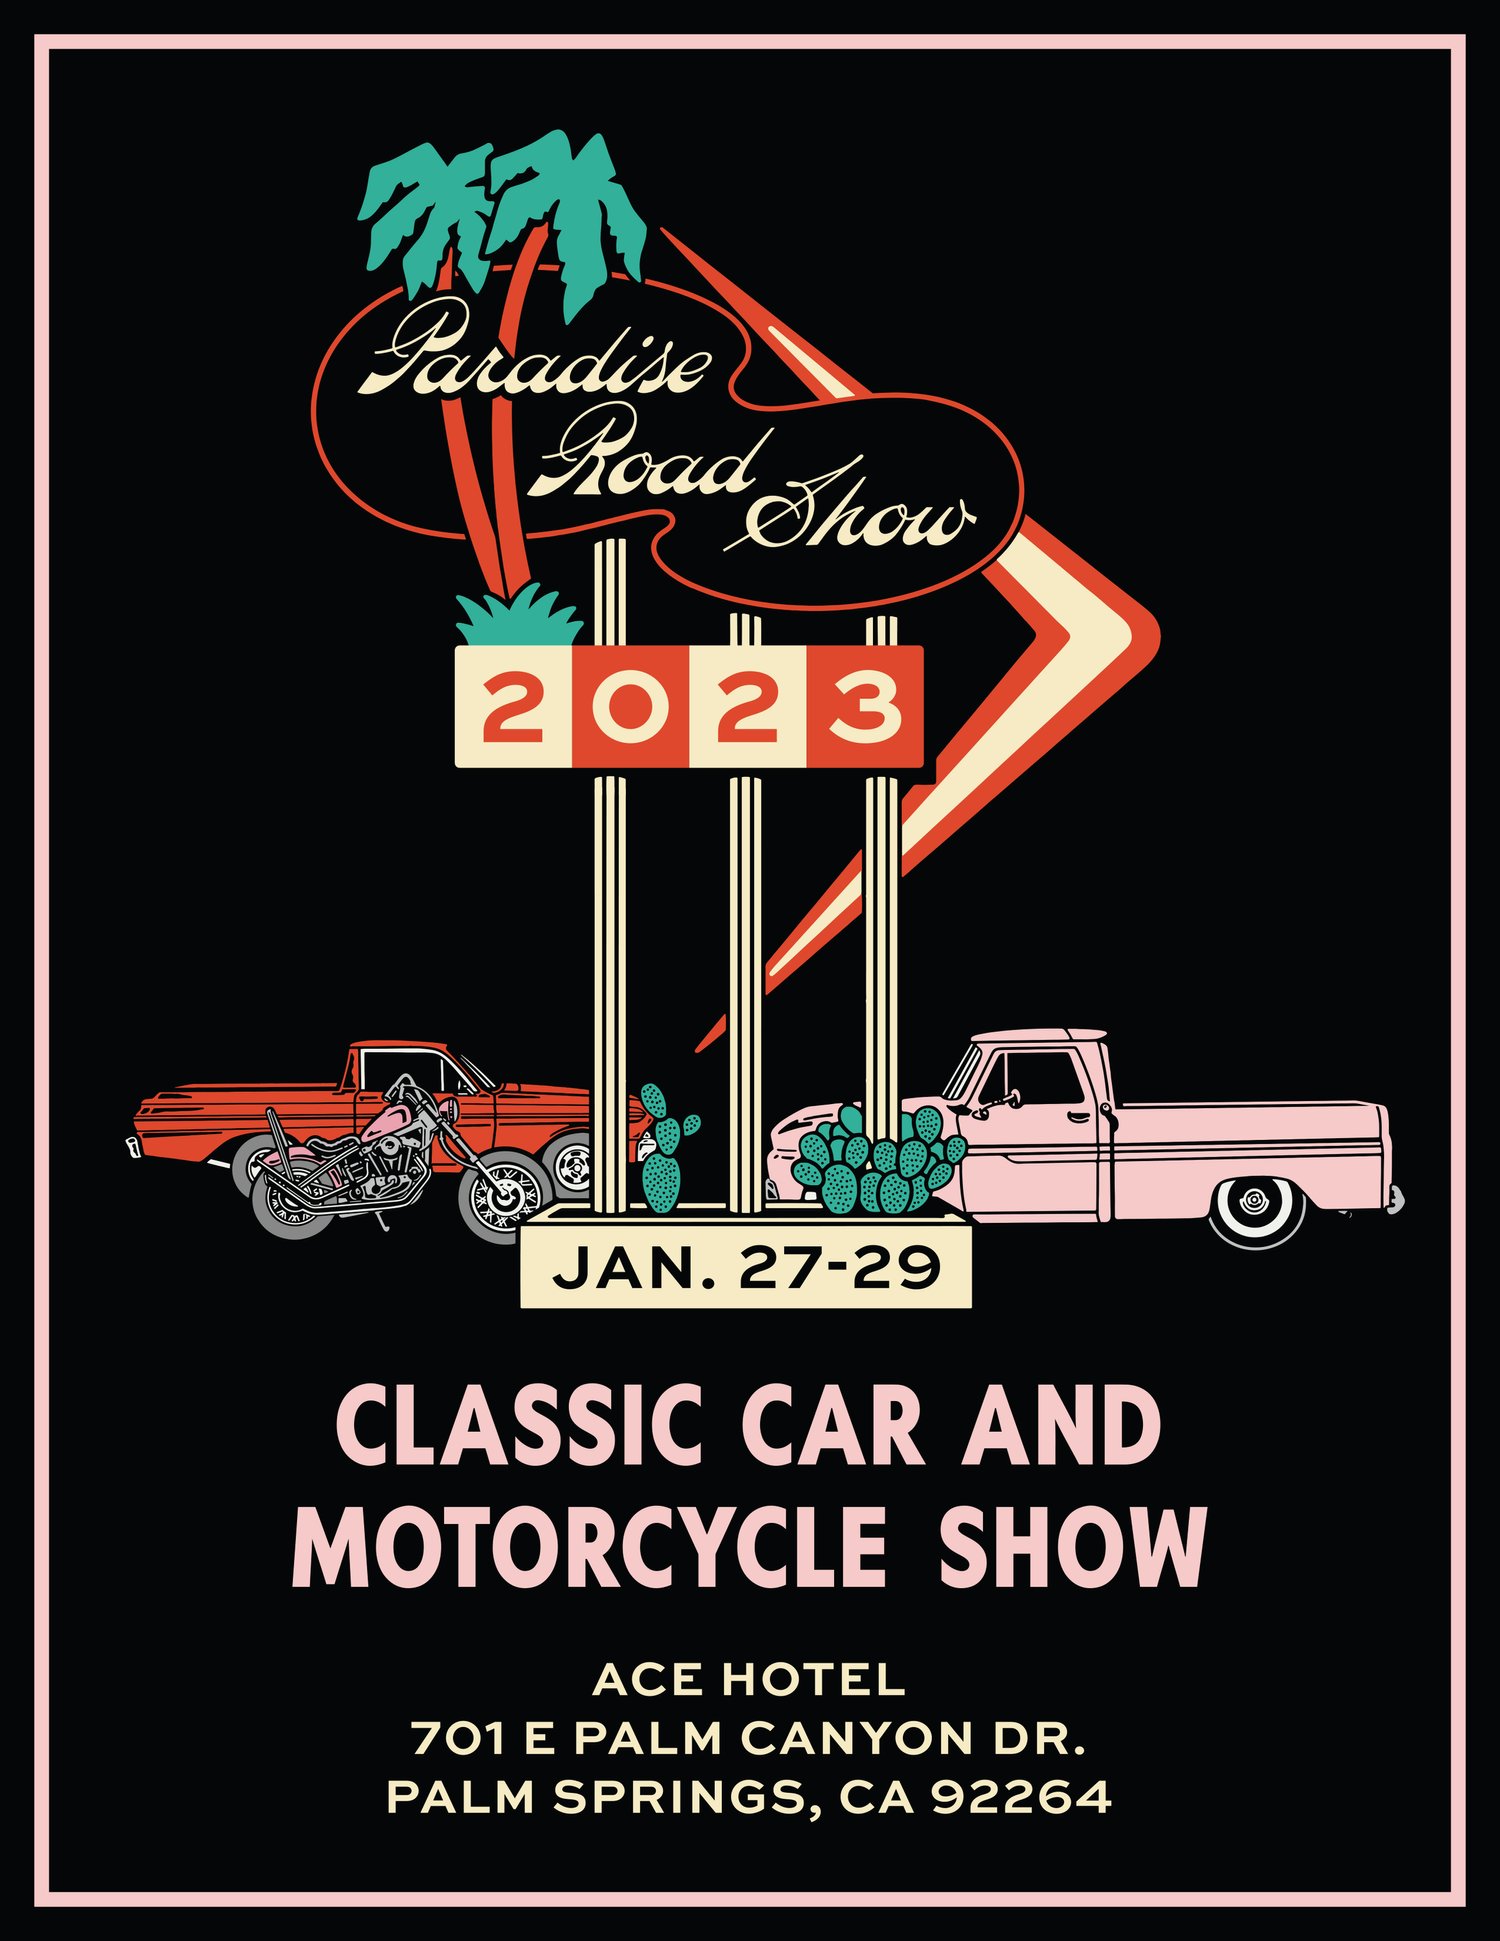 Paradise Road Show 2023 promo - January 27 through 29